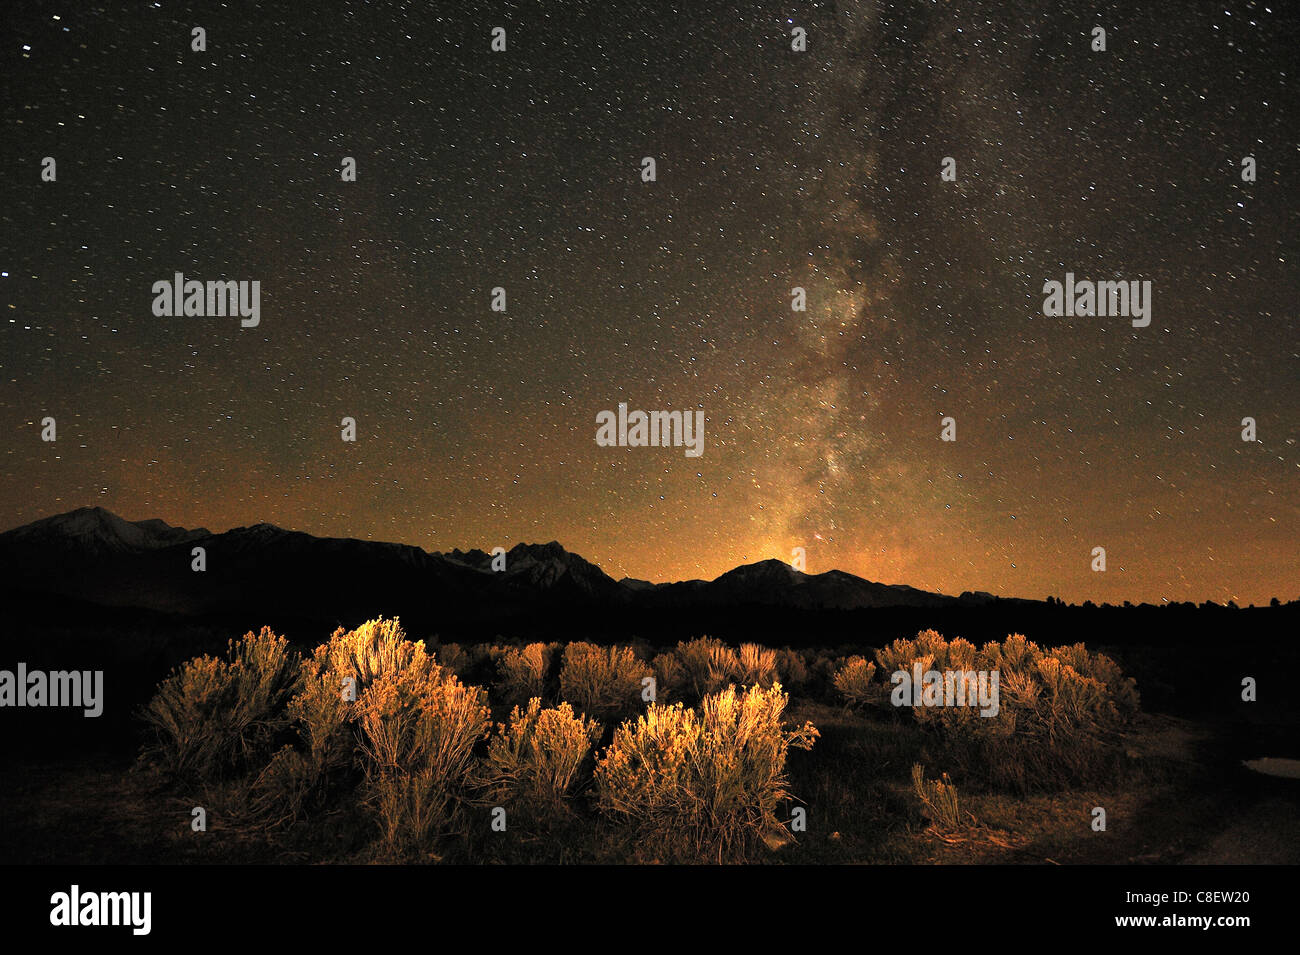 Natural, piscina, jacuzzi, estrellas en la noche, Sierra Nevada, montañas, cerca de Mammoth Lakes, California, USA, Estados Unidos, Améric Foto de stock